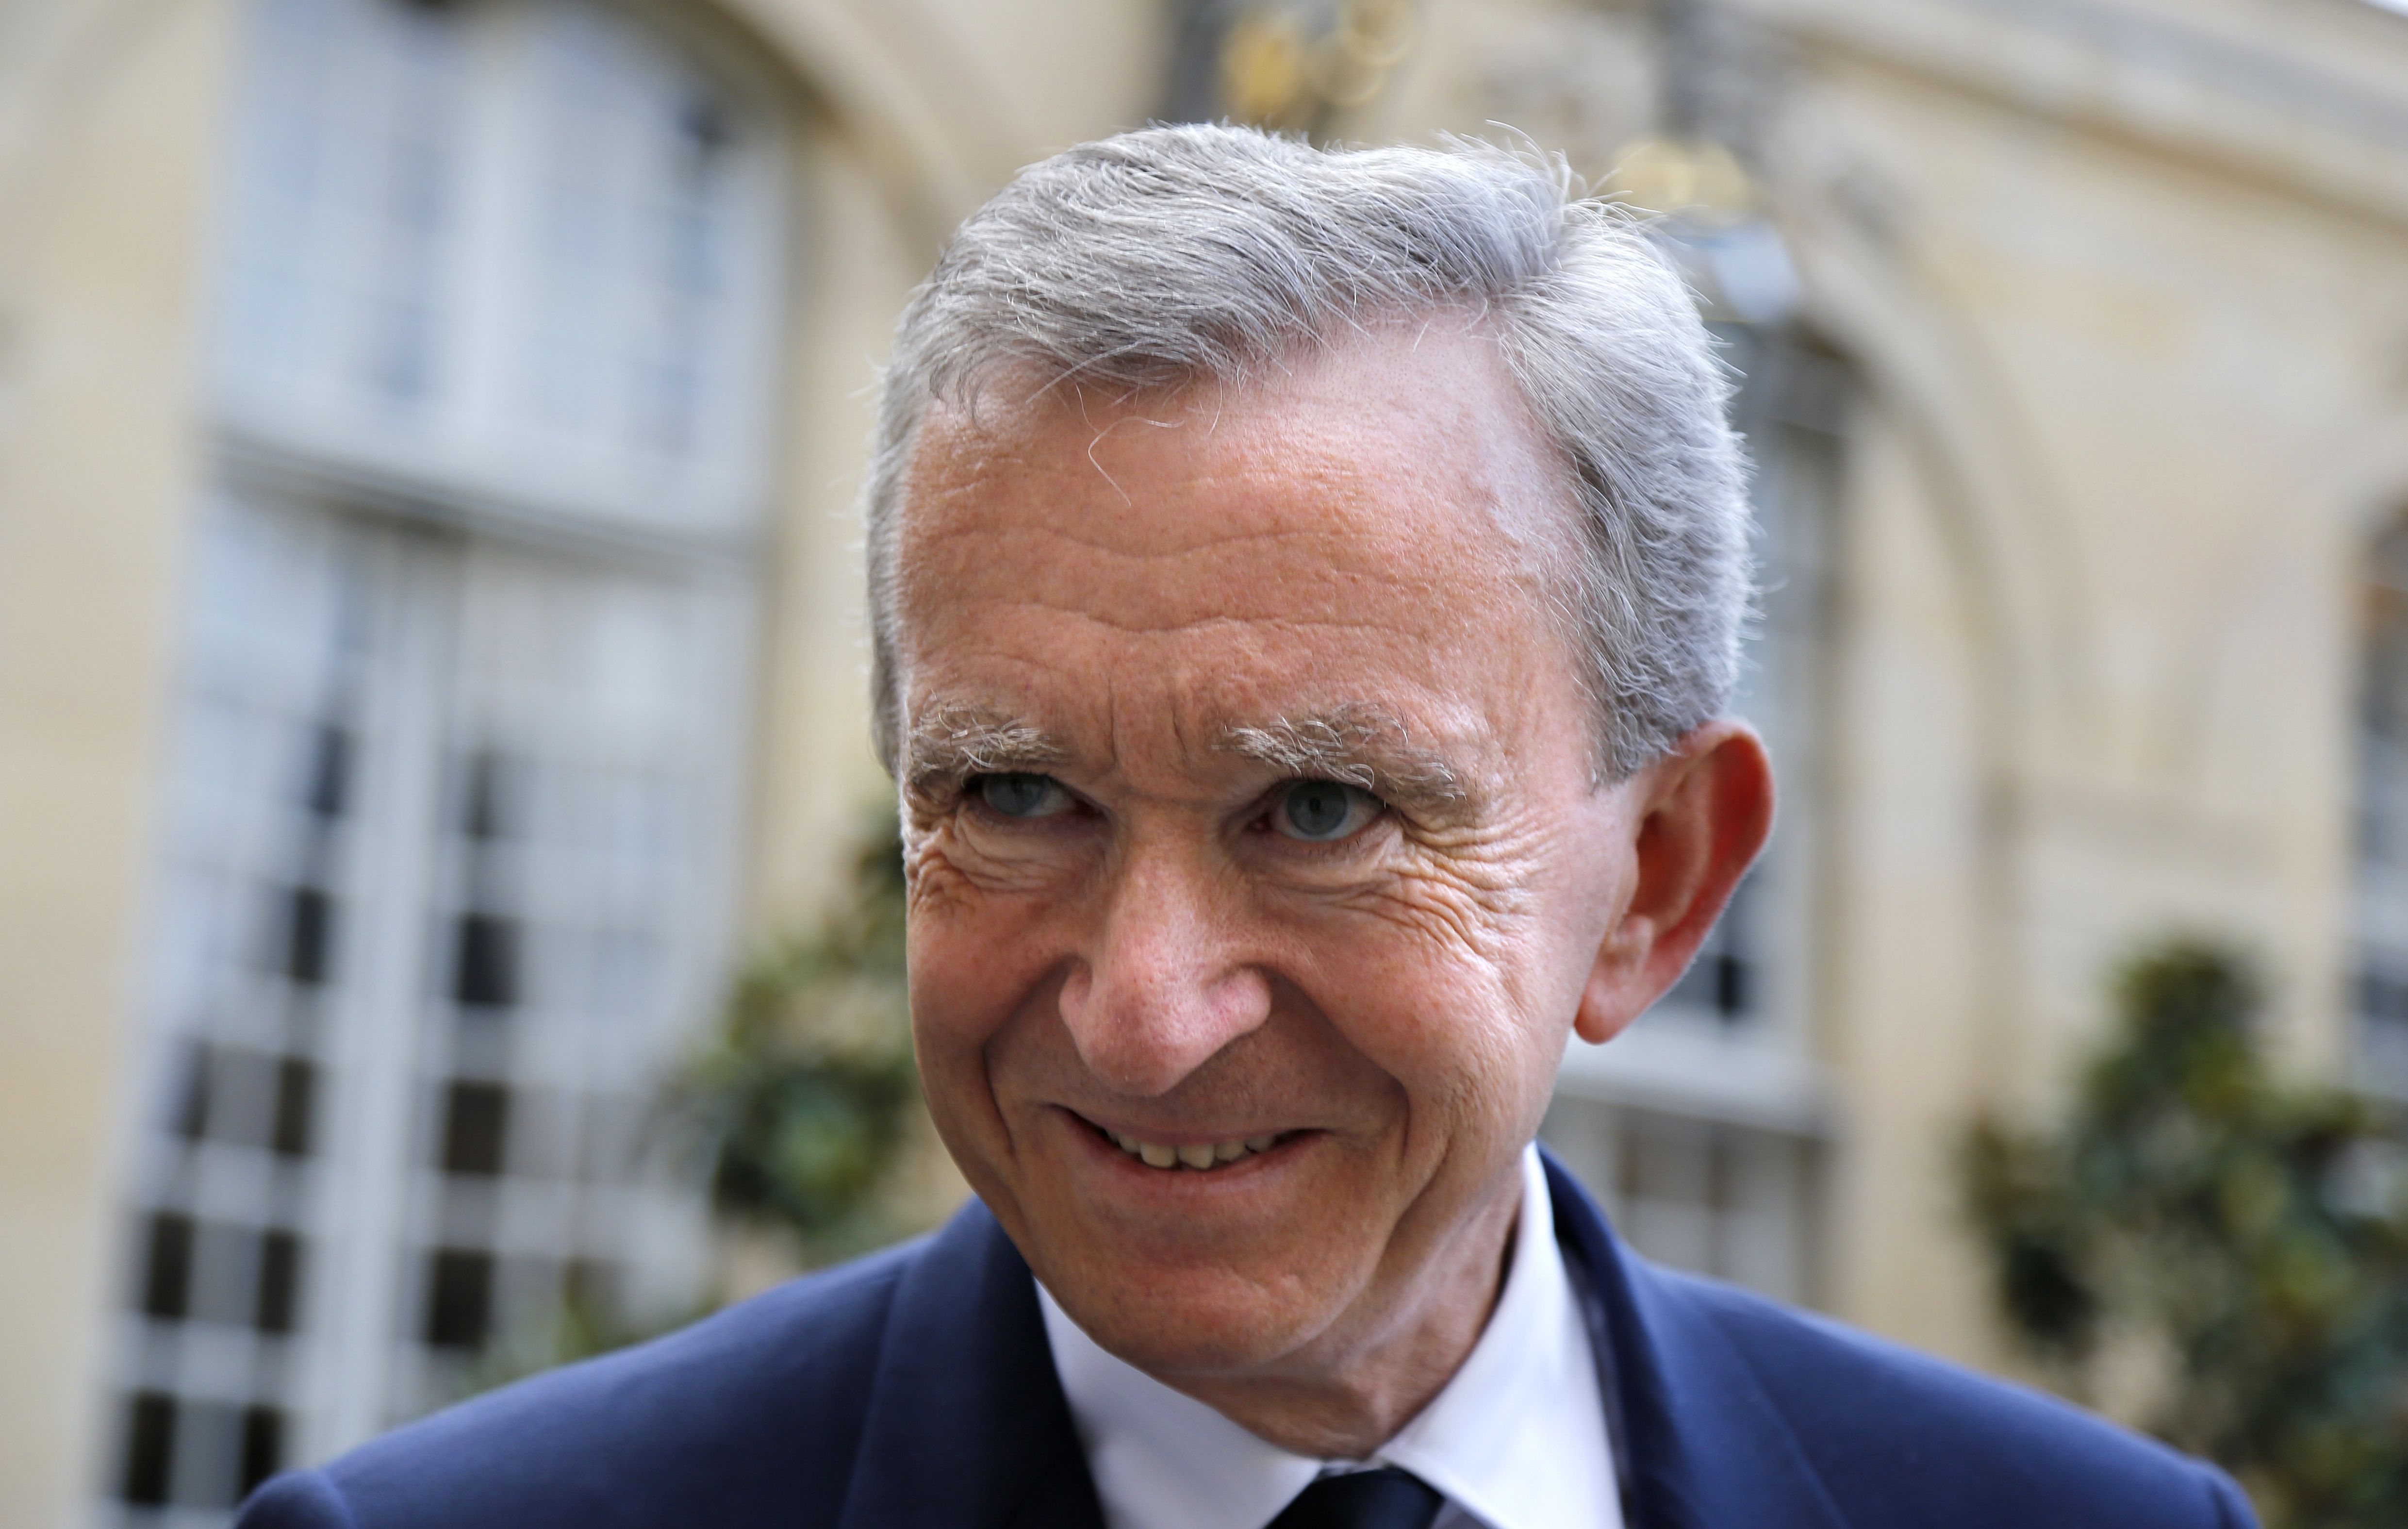 Bernard Arnault Signals Intent to Lead LVMH Until He Is 80